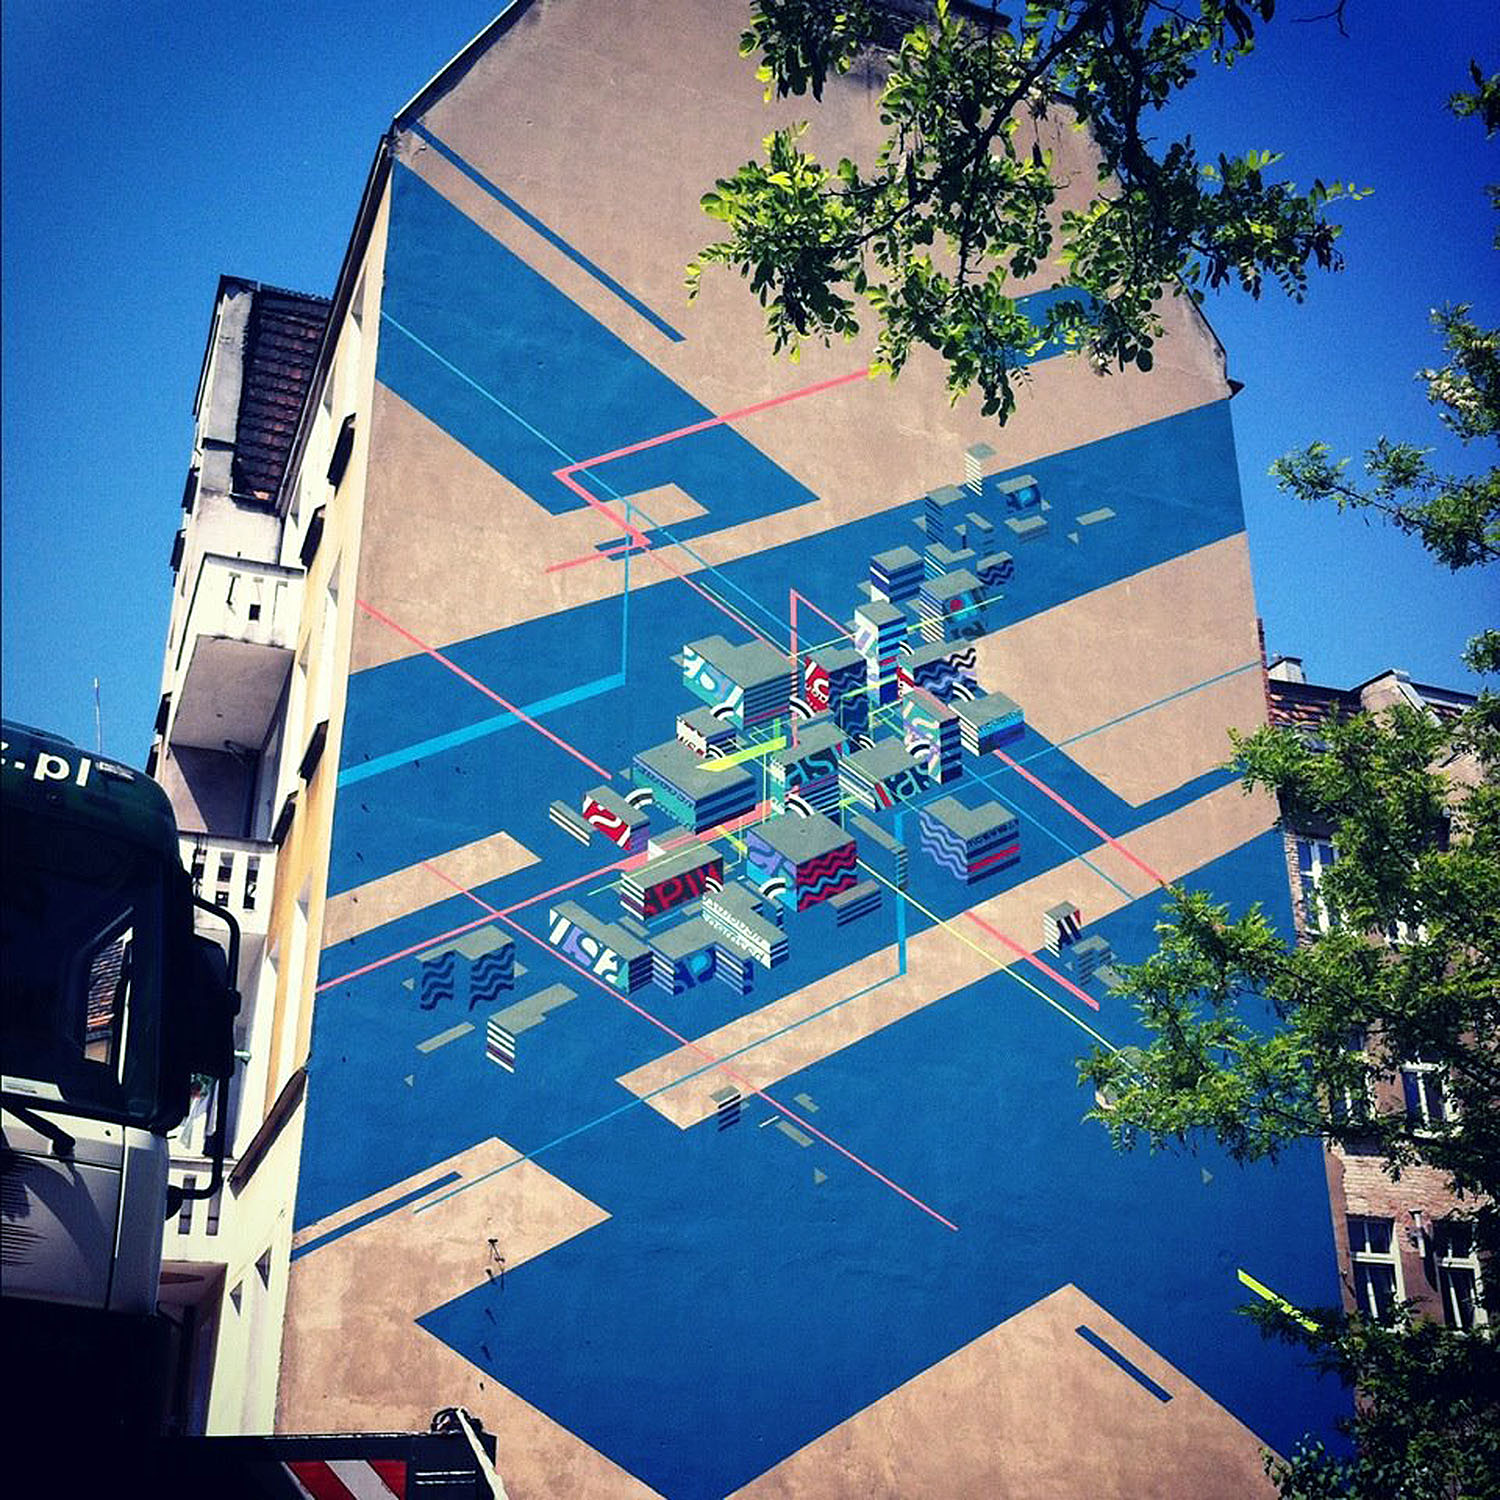 Chazme x Nawer “Analog Tokyo” New Mural In Poznan, Poland